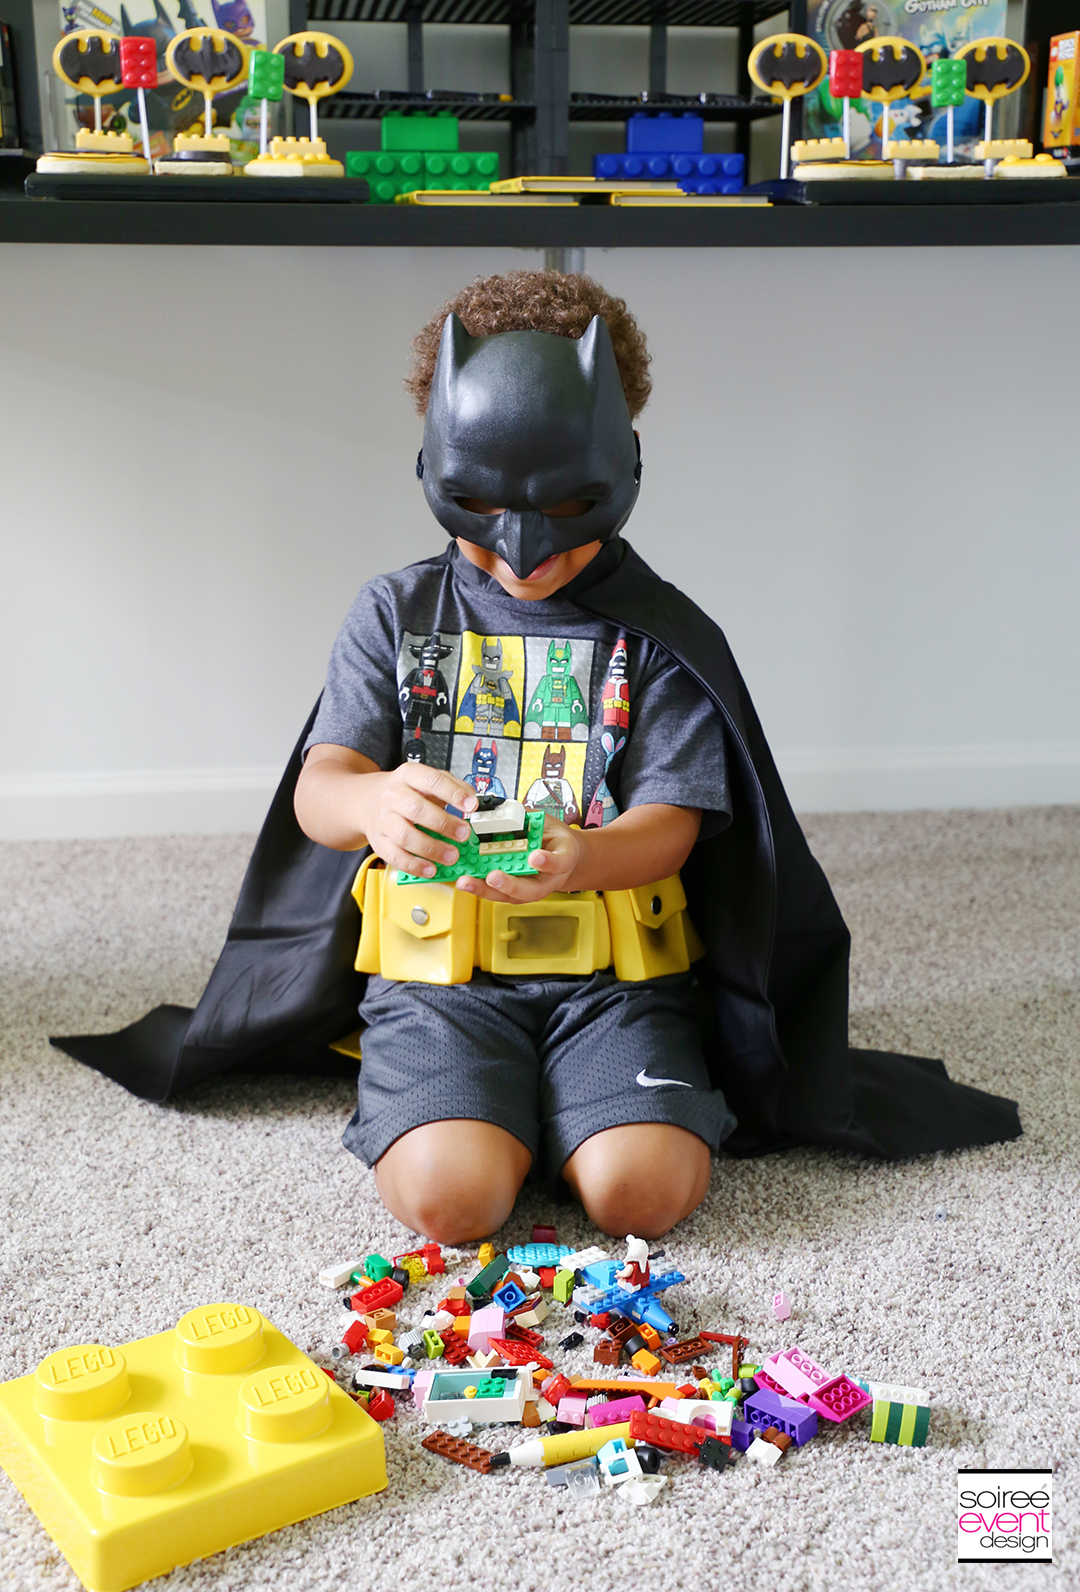 LEGO Batman Party Activities - 1